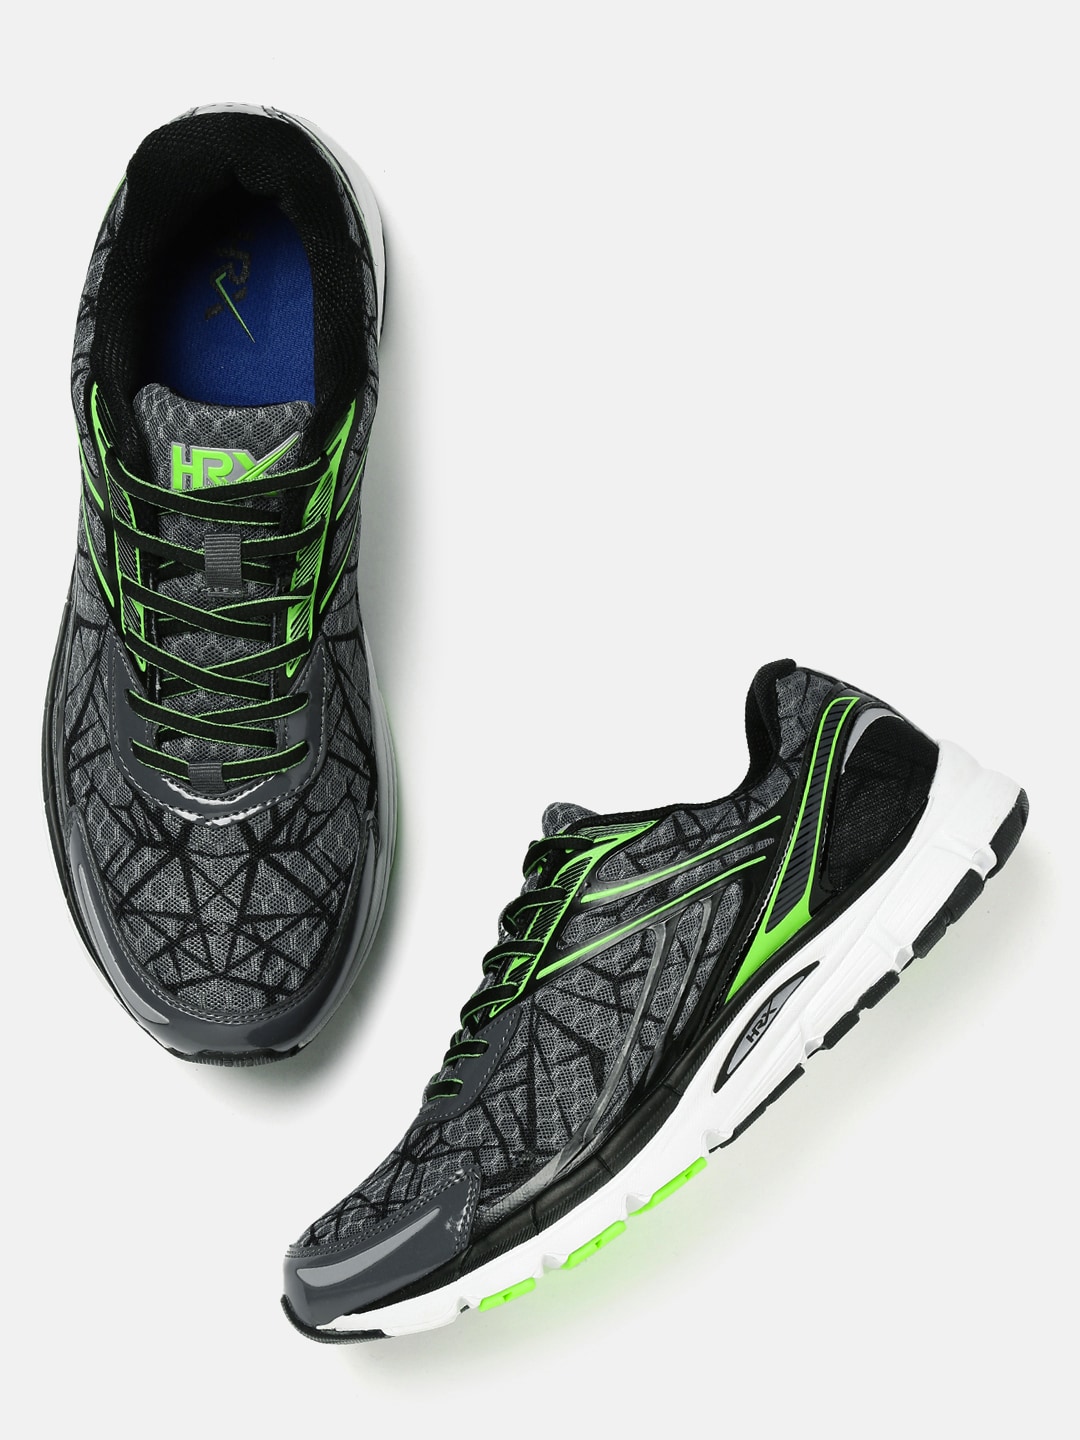 Hrx By Hrithik Roshan Black Running Shoes for Men online in India at ...